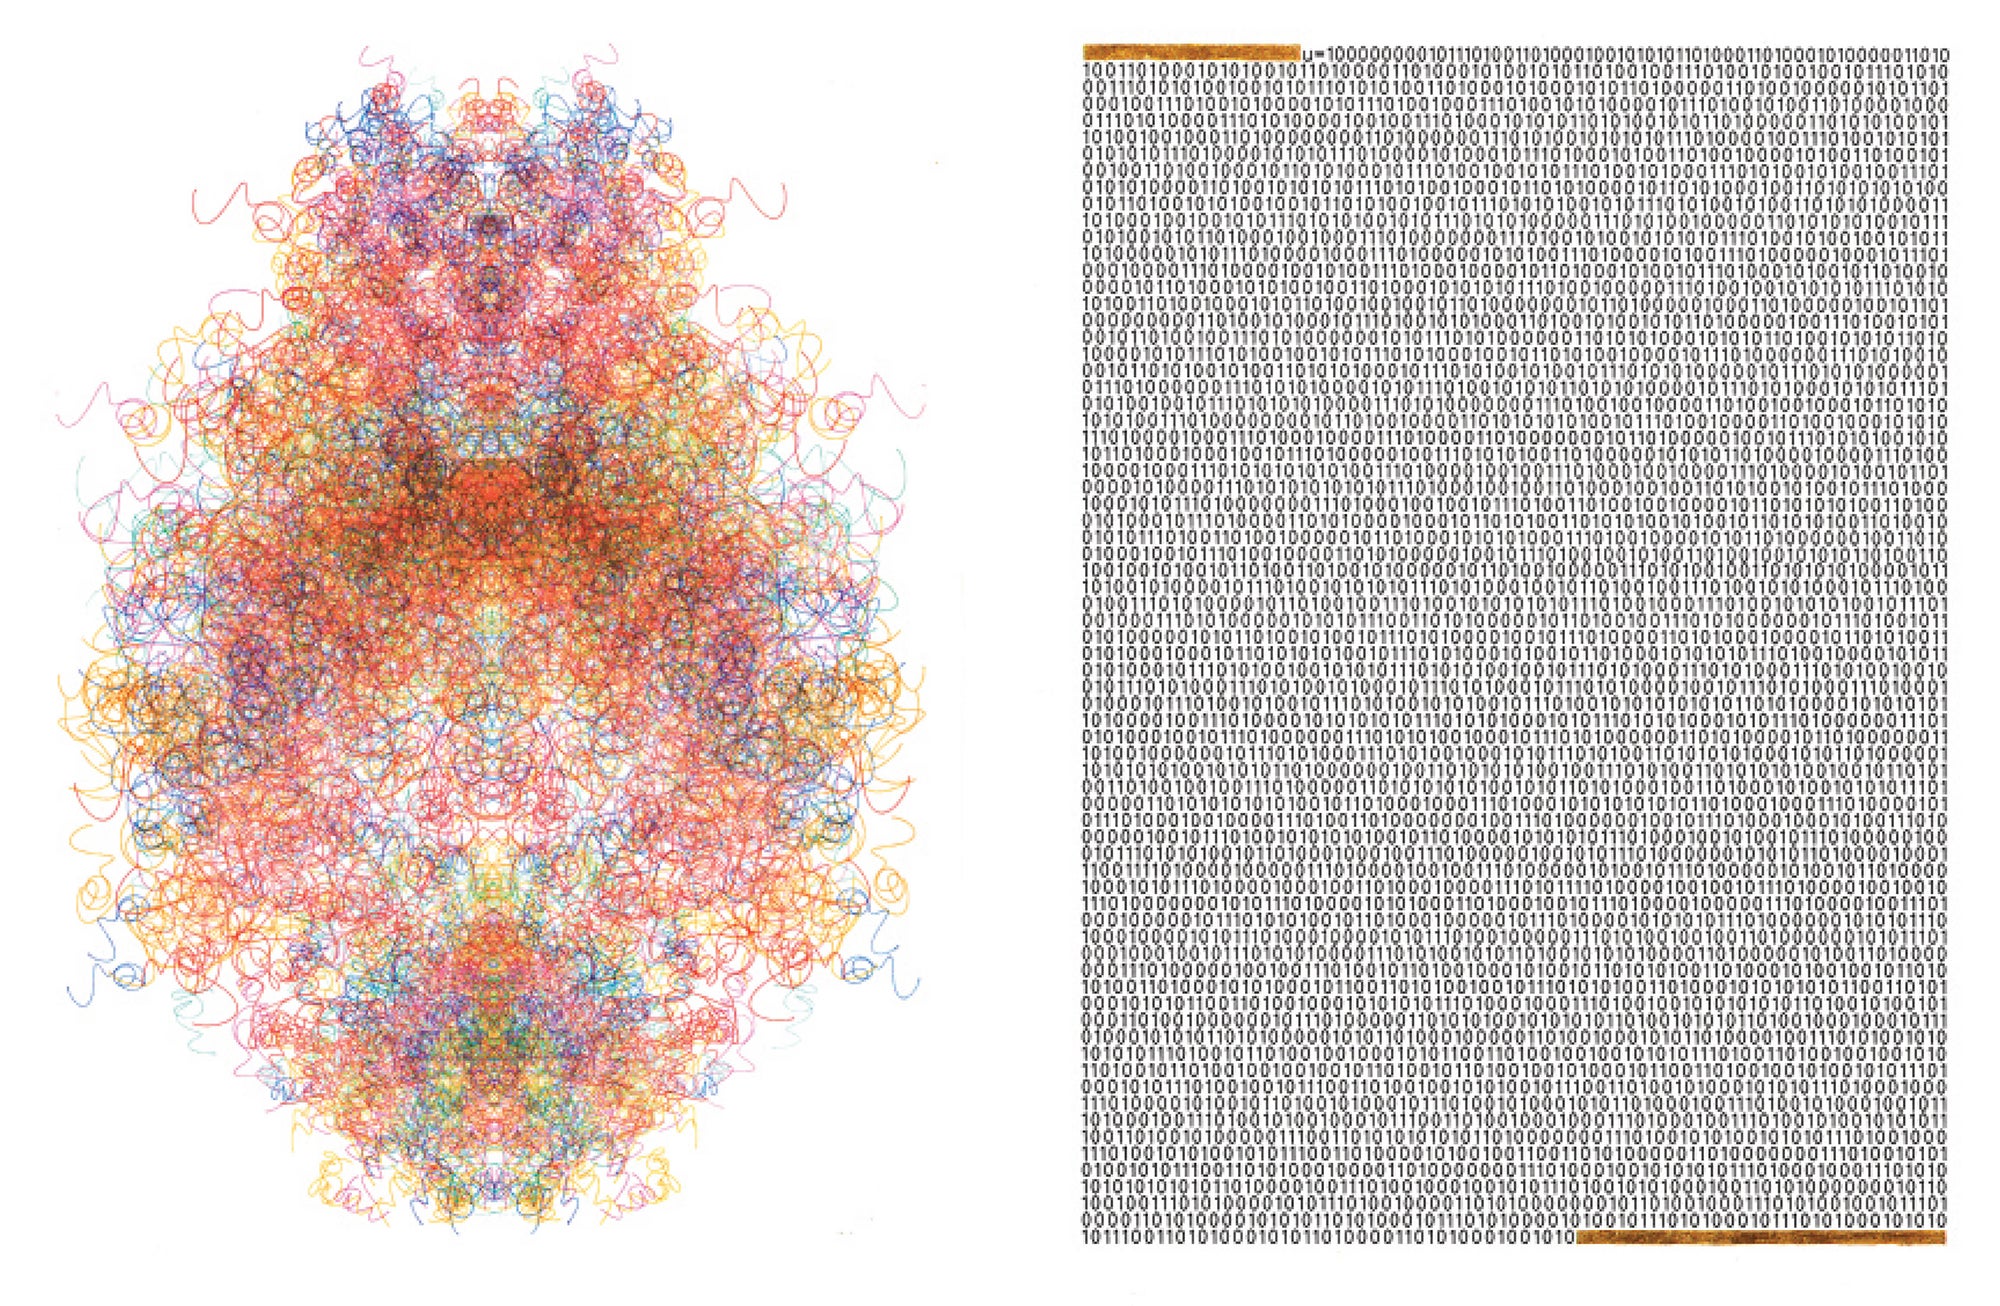 Fractal Art Combines Math and Computing